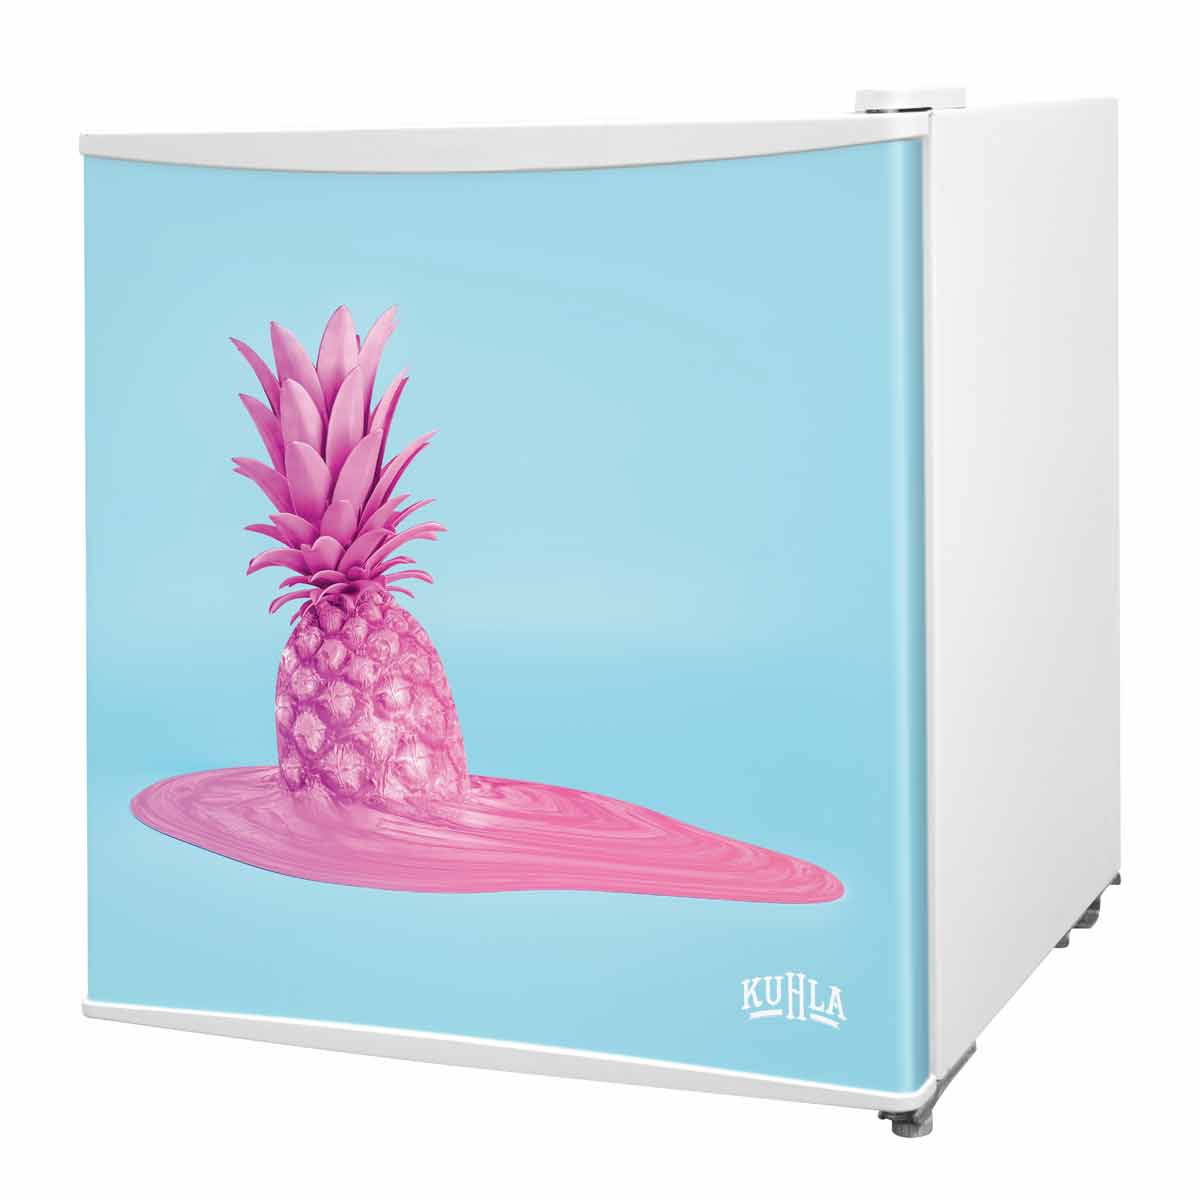 Kuhla KTTF4GB-1018 Pineapple 43L Mini Fridge With Ice Box - White